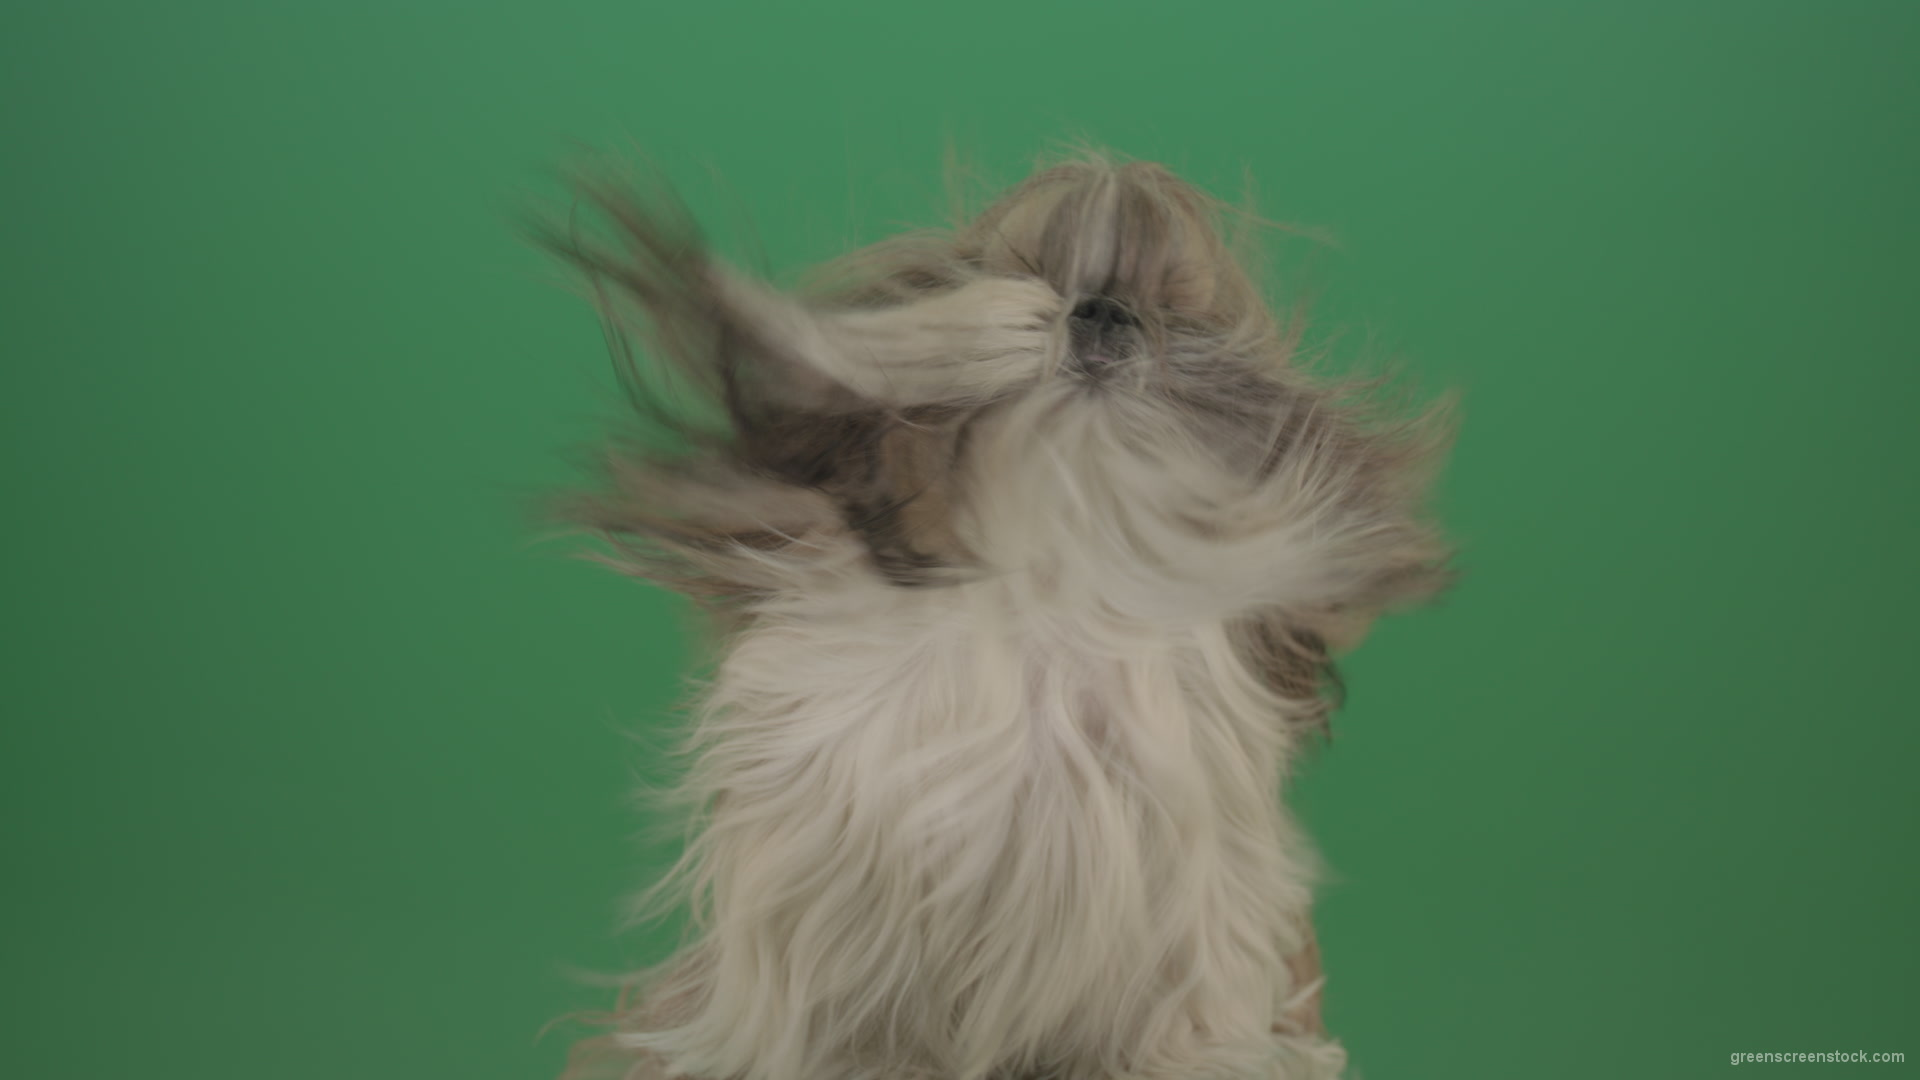 Fashion-long-hair-Shihtzu-dog-in-wind-turbulence-hairstyle-isolated-on-green-screen_008 Green Screen Stock